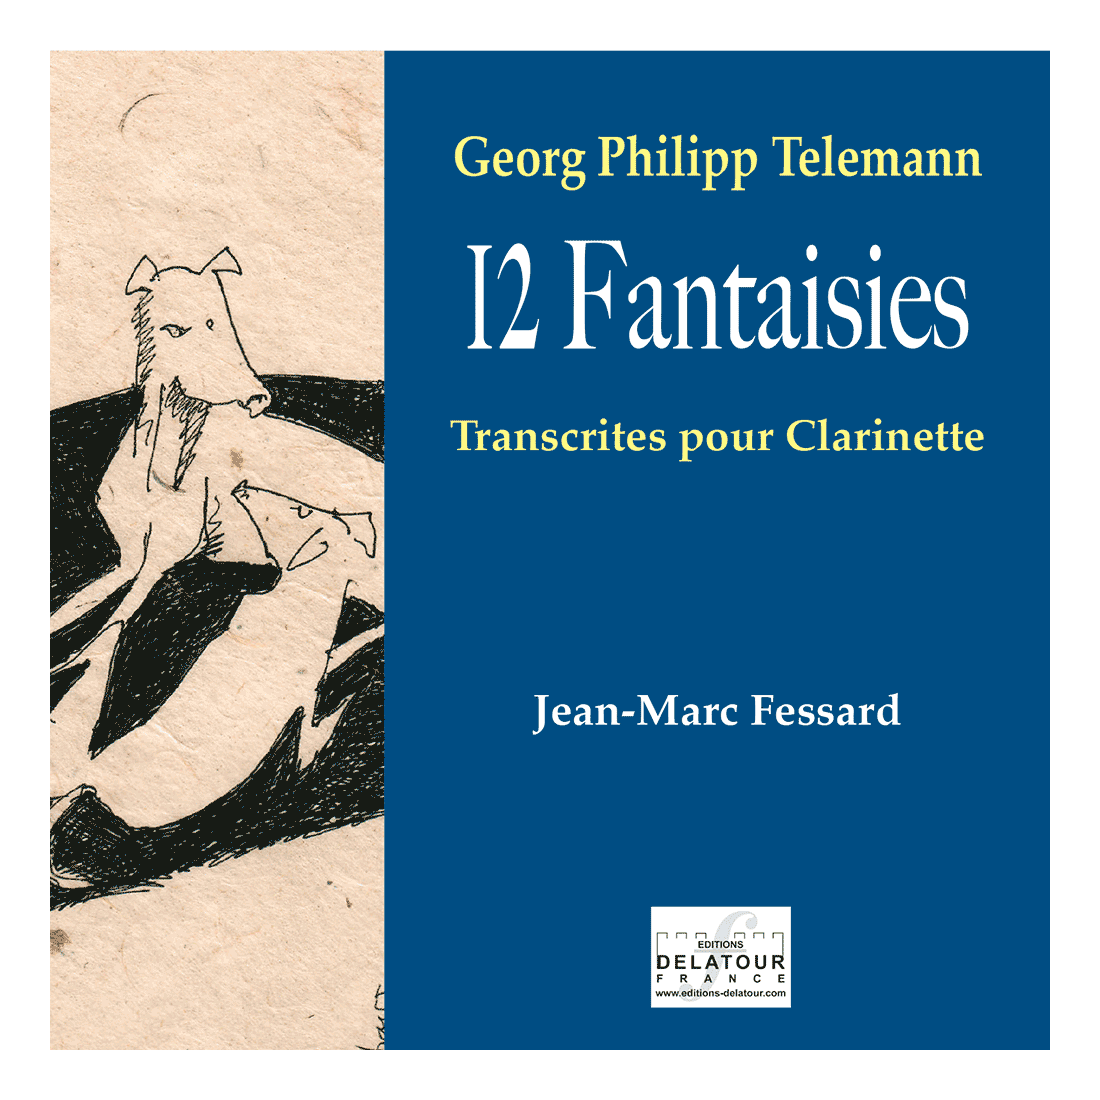 12 fantasies - Georg-Philipp Telemann